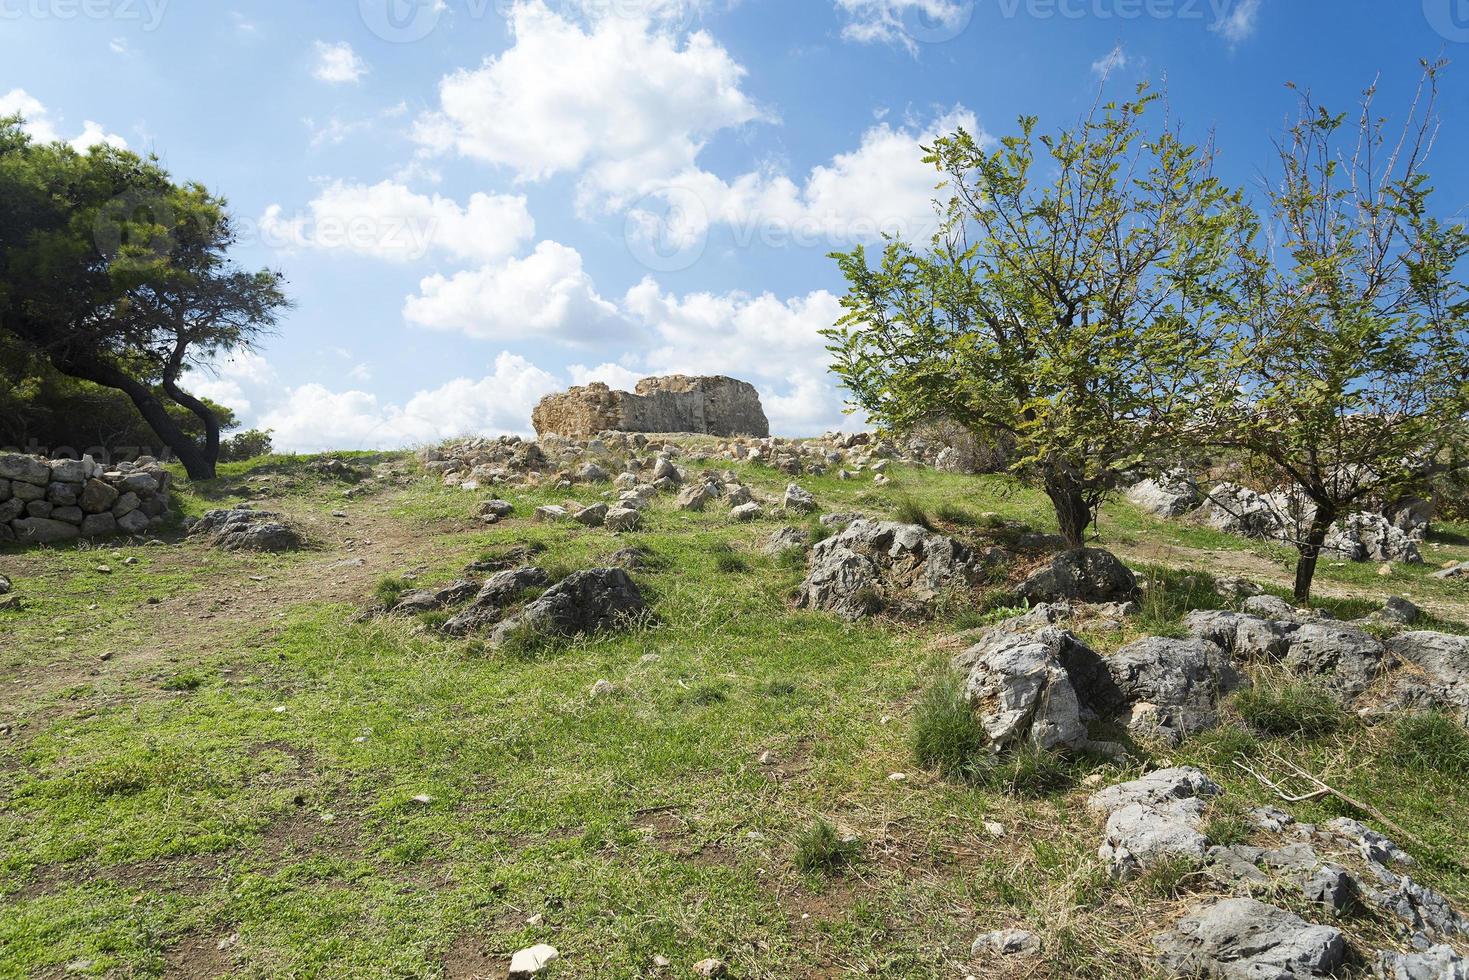 Bastion of citadel Fortezza in city of Rethymno, Crete, Greece photo